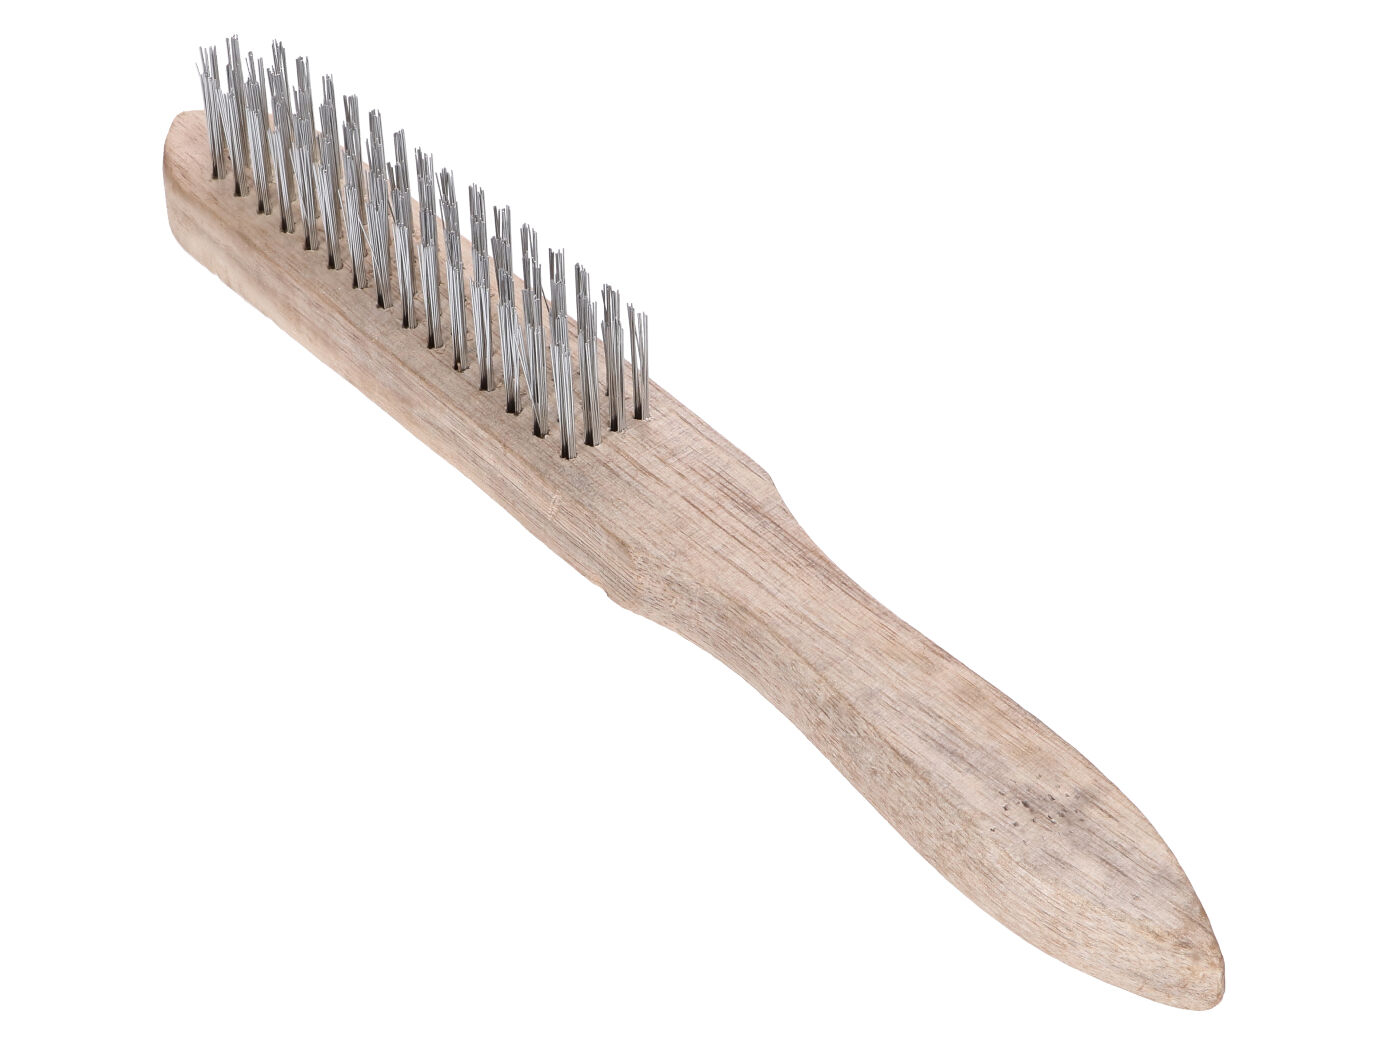 Steel Brush 4-row W/ Wooden Handle